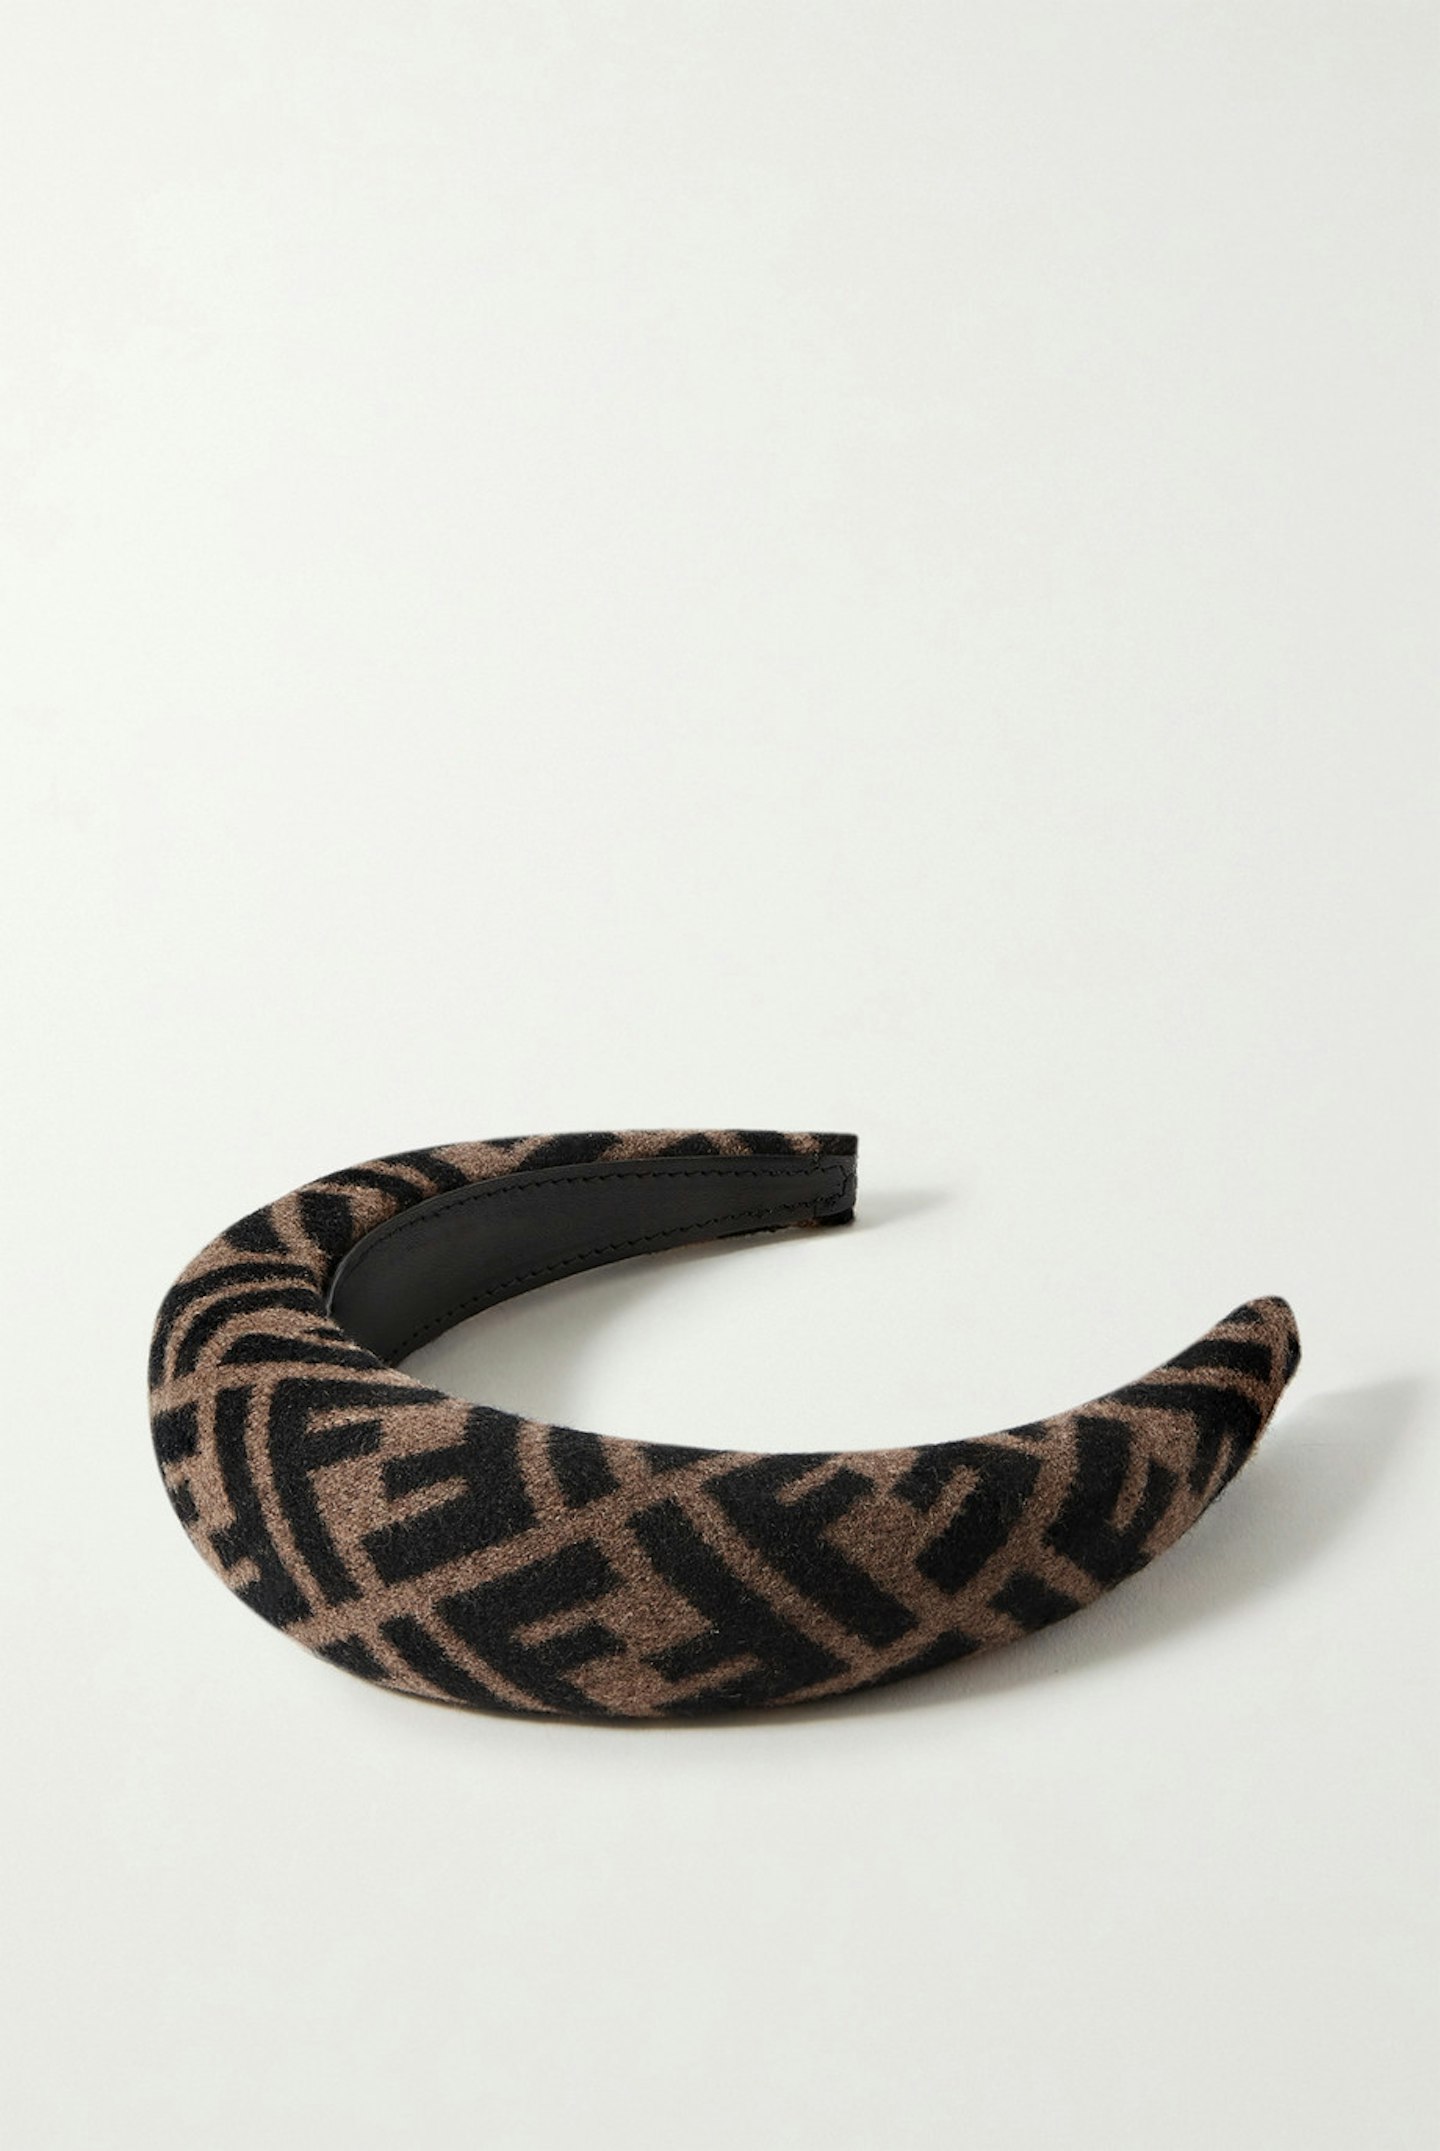 Fendi, Printed wool-blend felt headband, £220